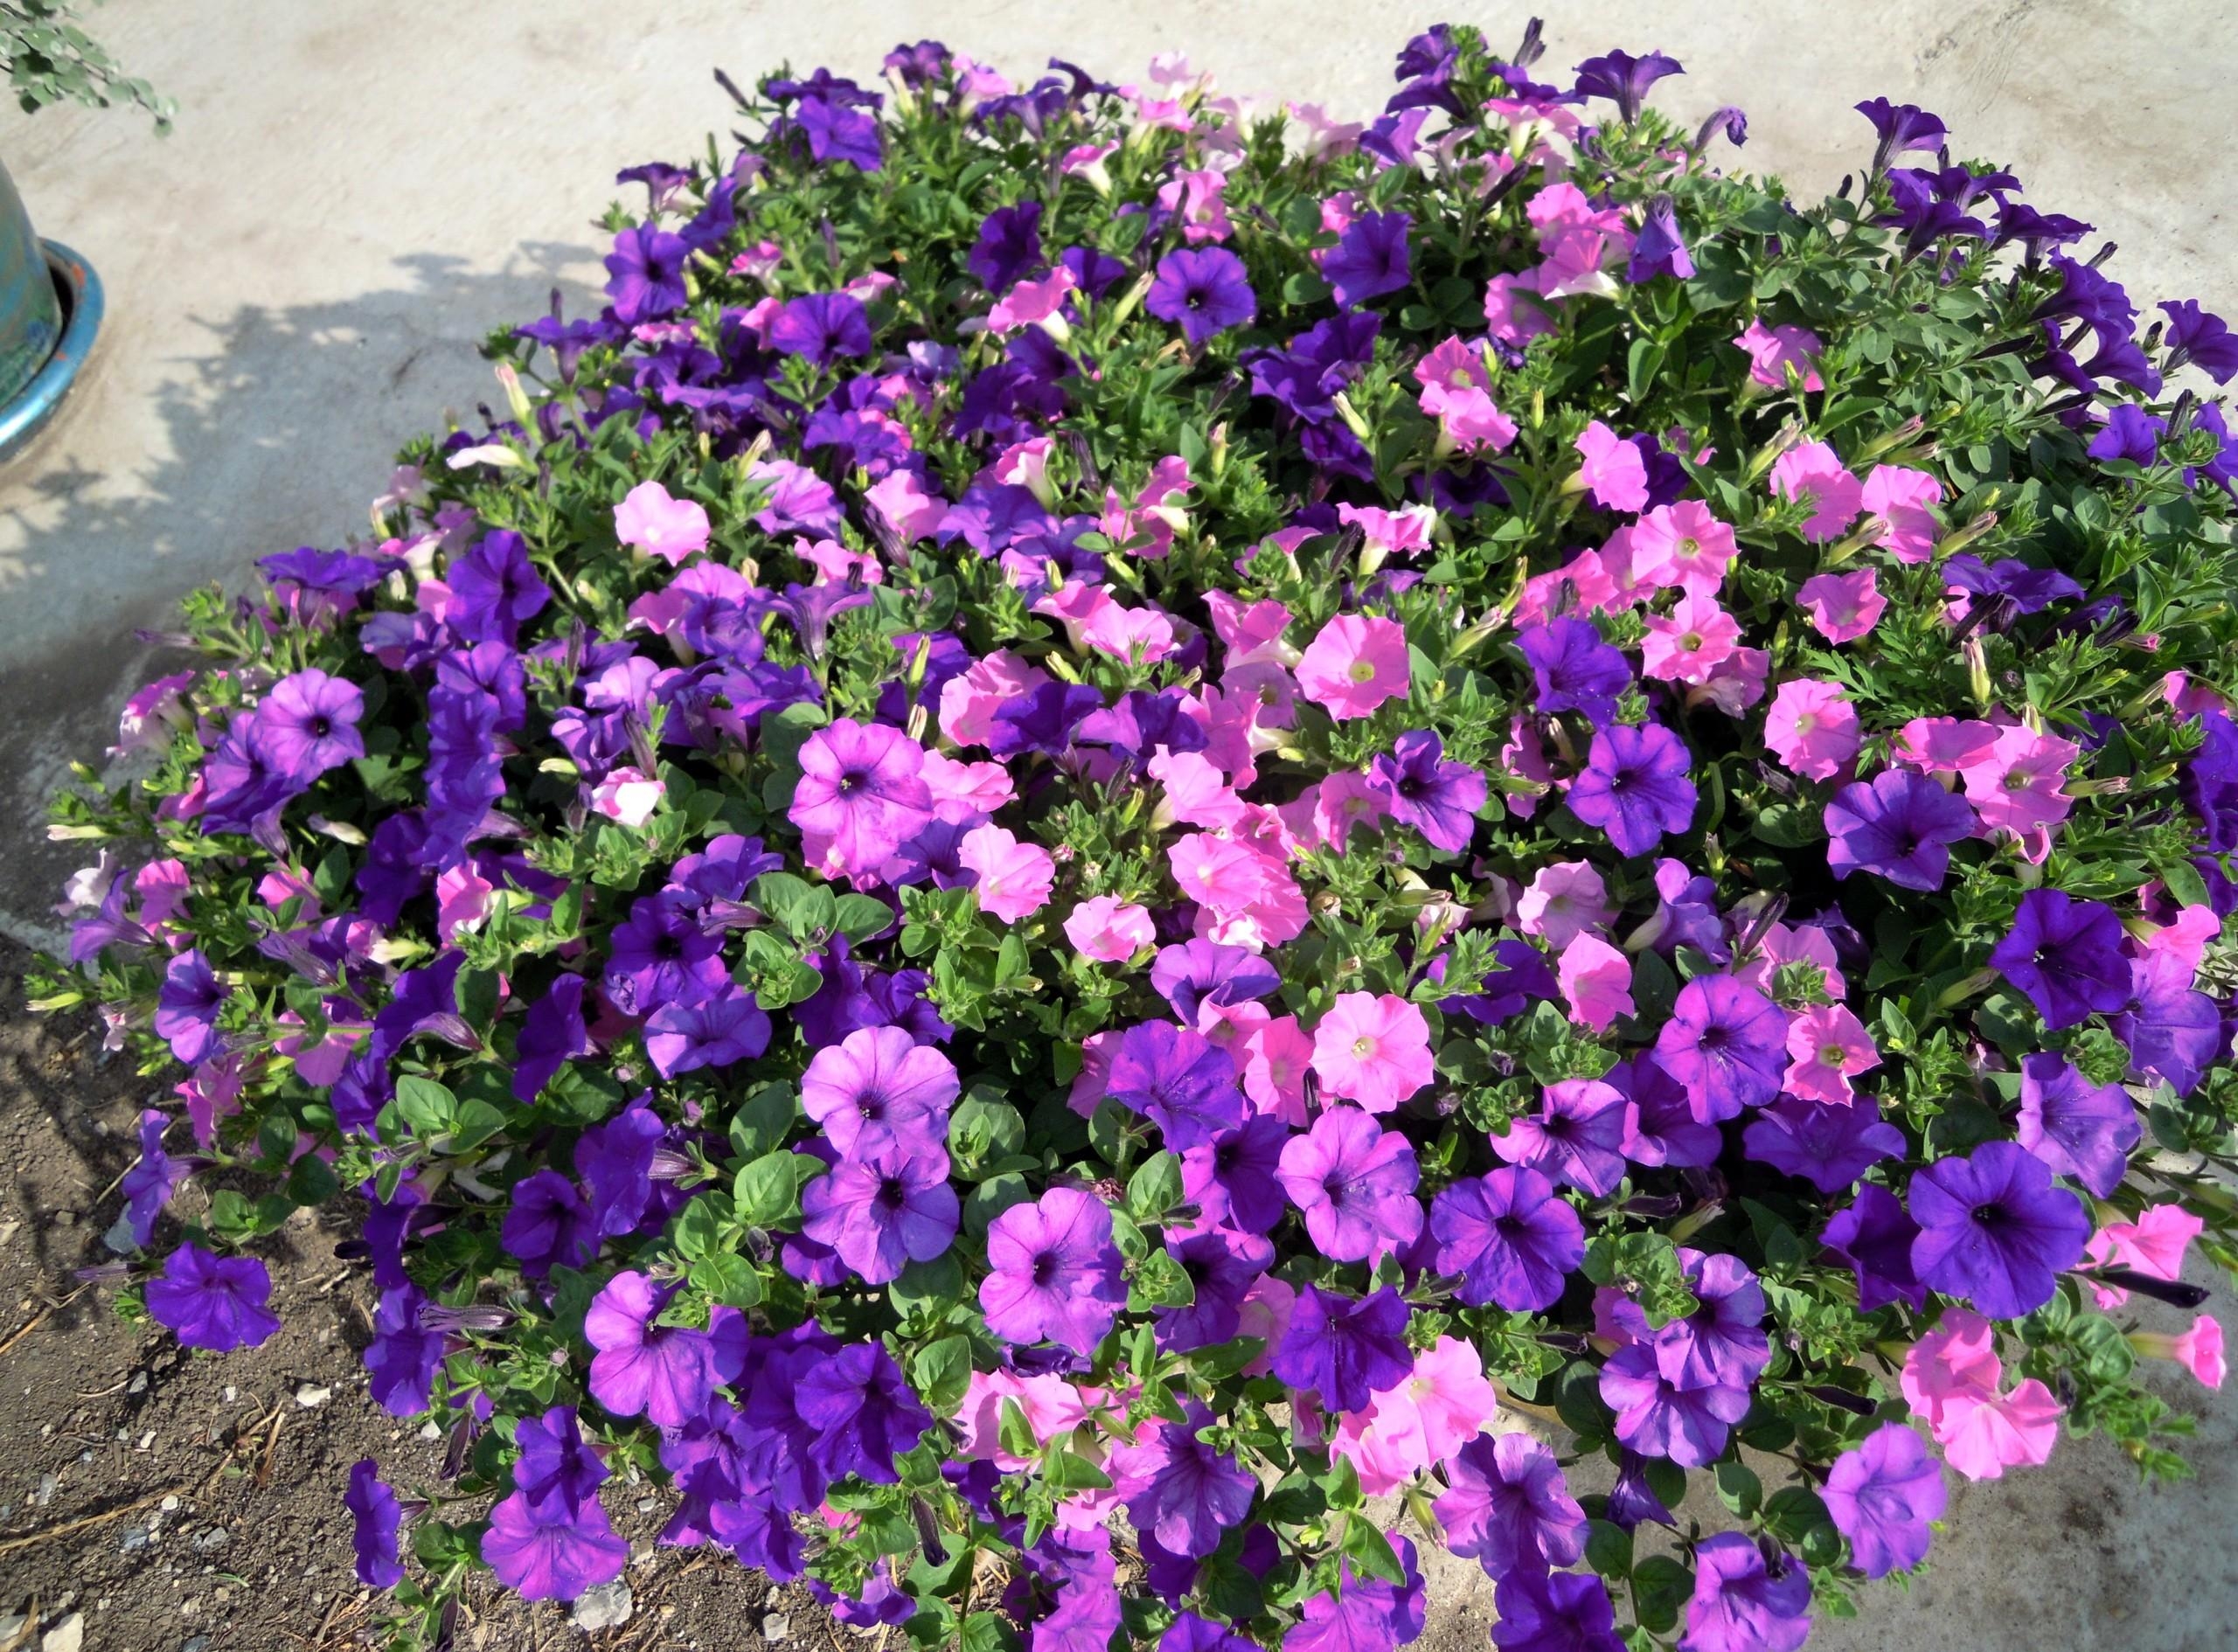 Small purple flowers of purple petunia